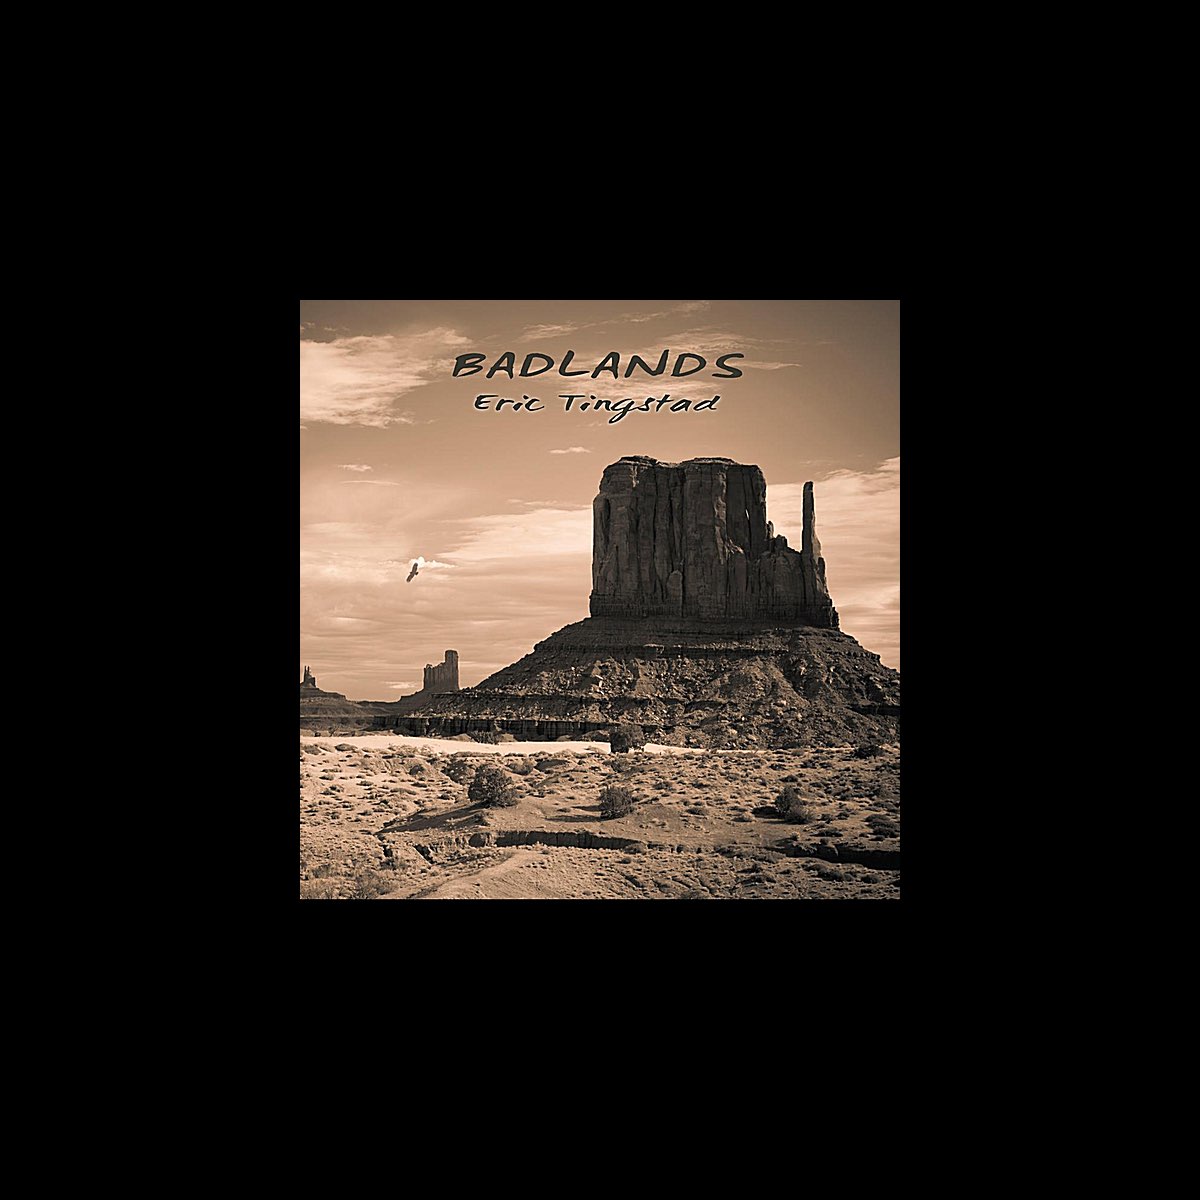 Badlands par Eric Tingstad sur Apple Music